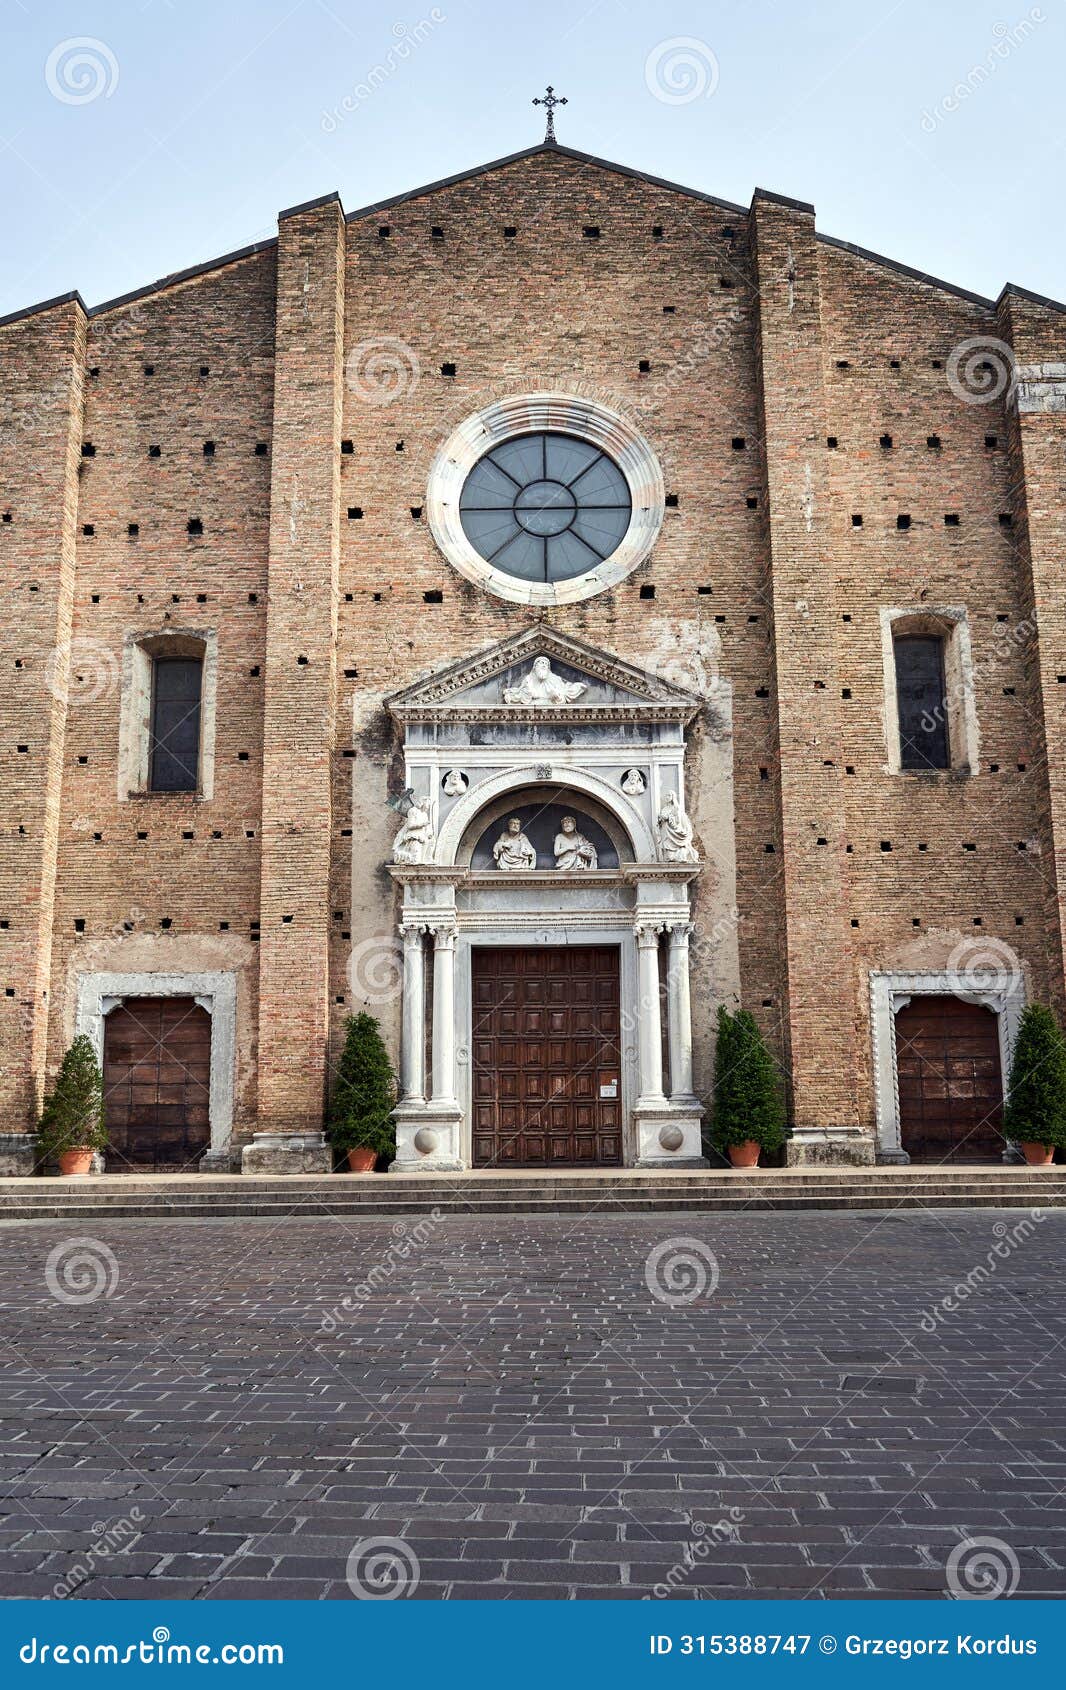 gothic facade of the duomo di santa maria annunziata cathedral in the town of salo on lake garda